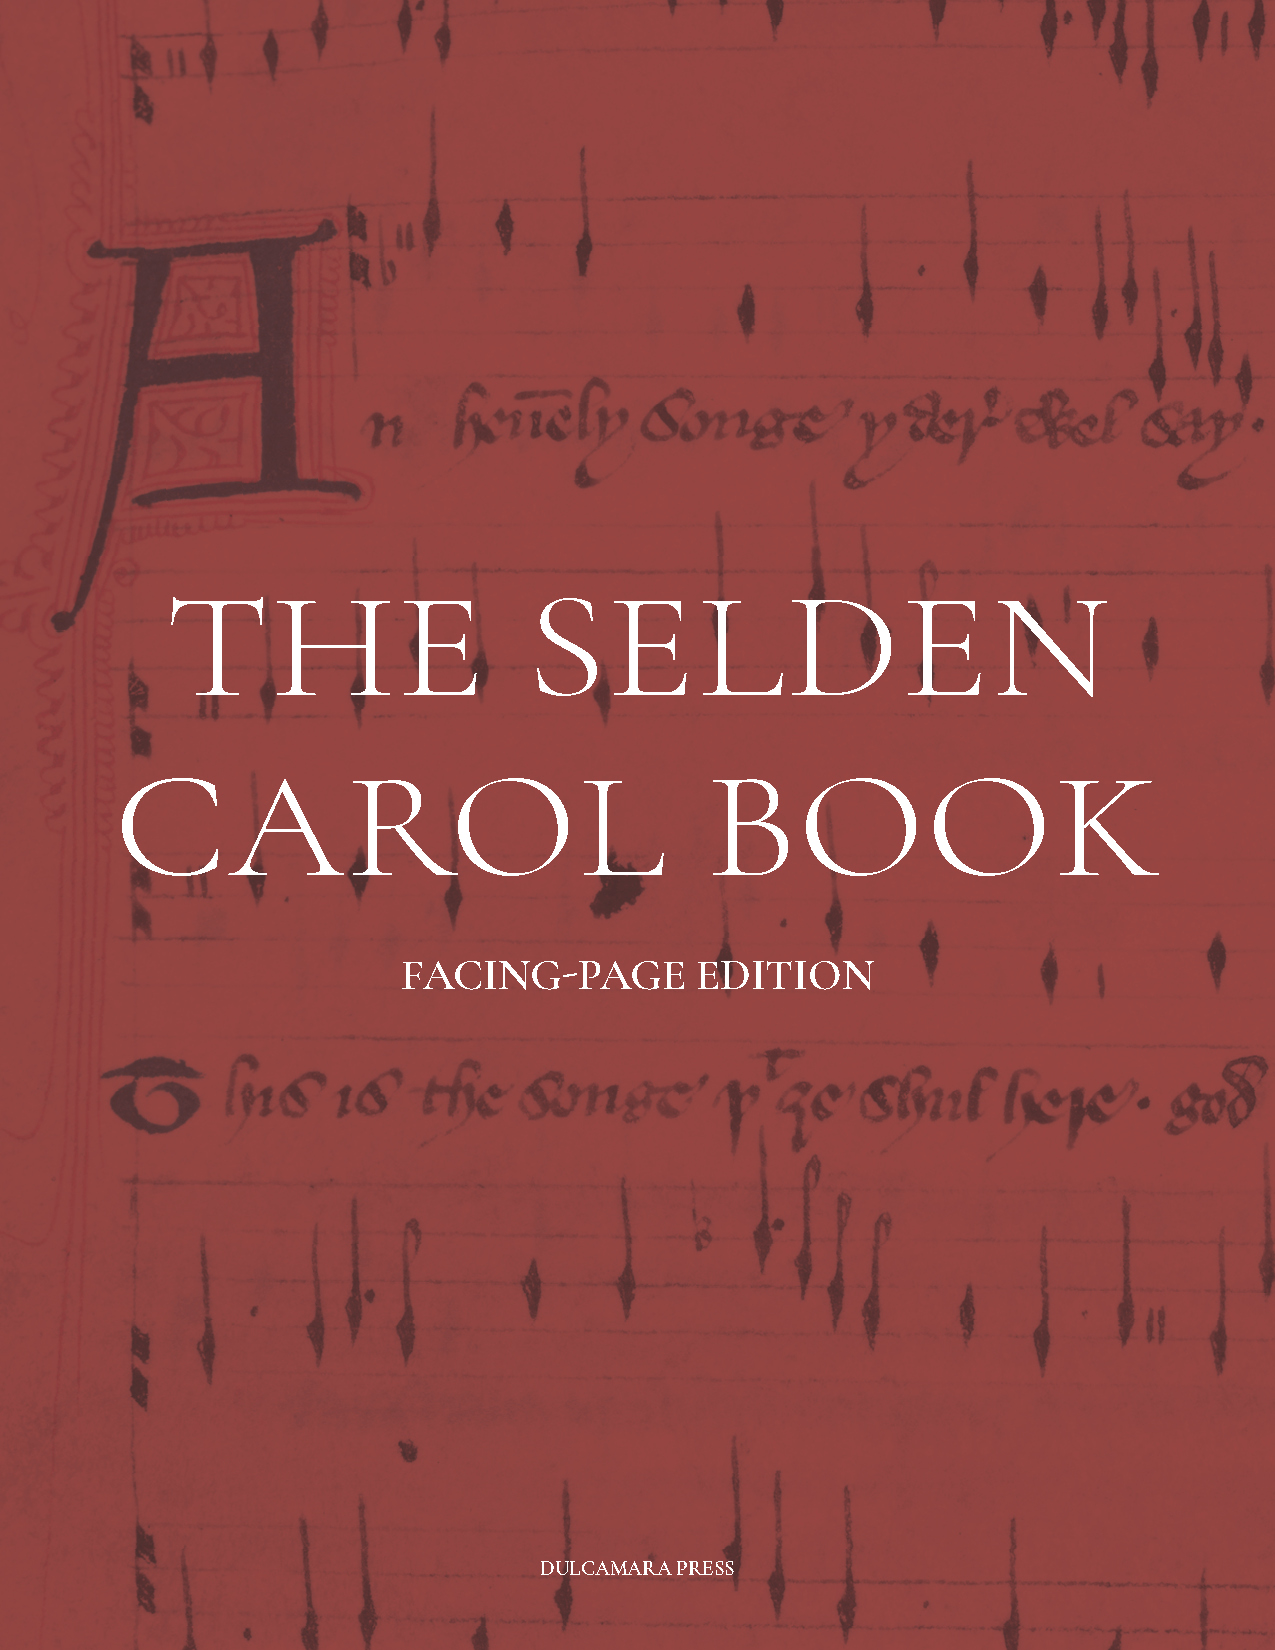 The Selden Carol Book; facing page edition